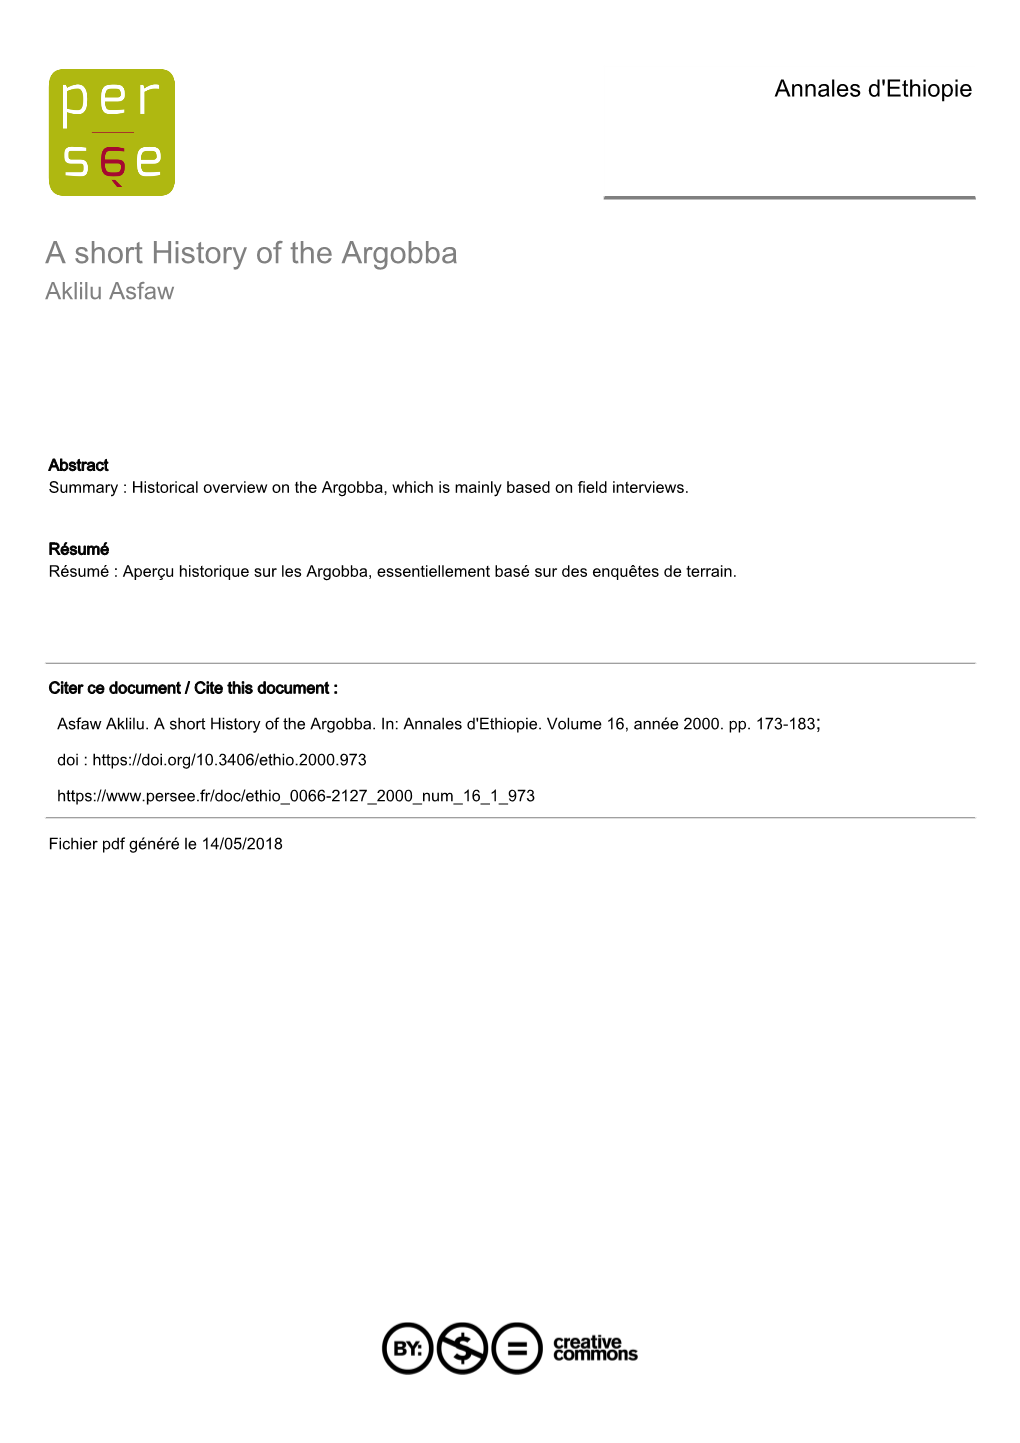 Aklilu Asfaw. a Short History of the Argobba